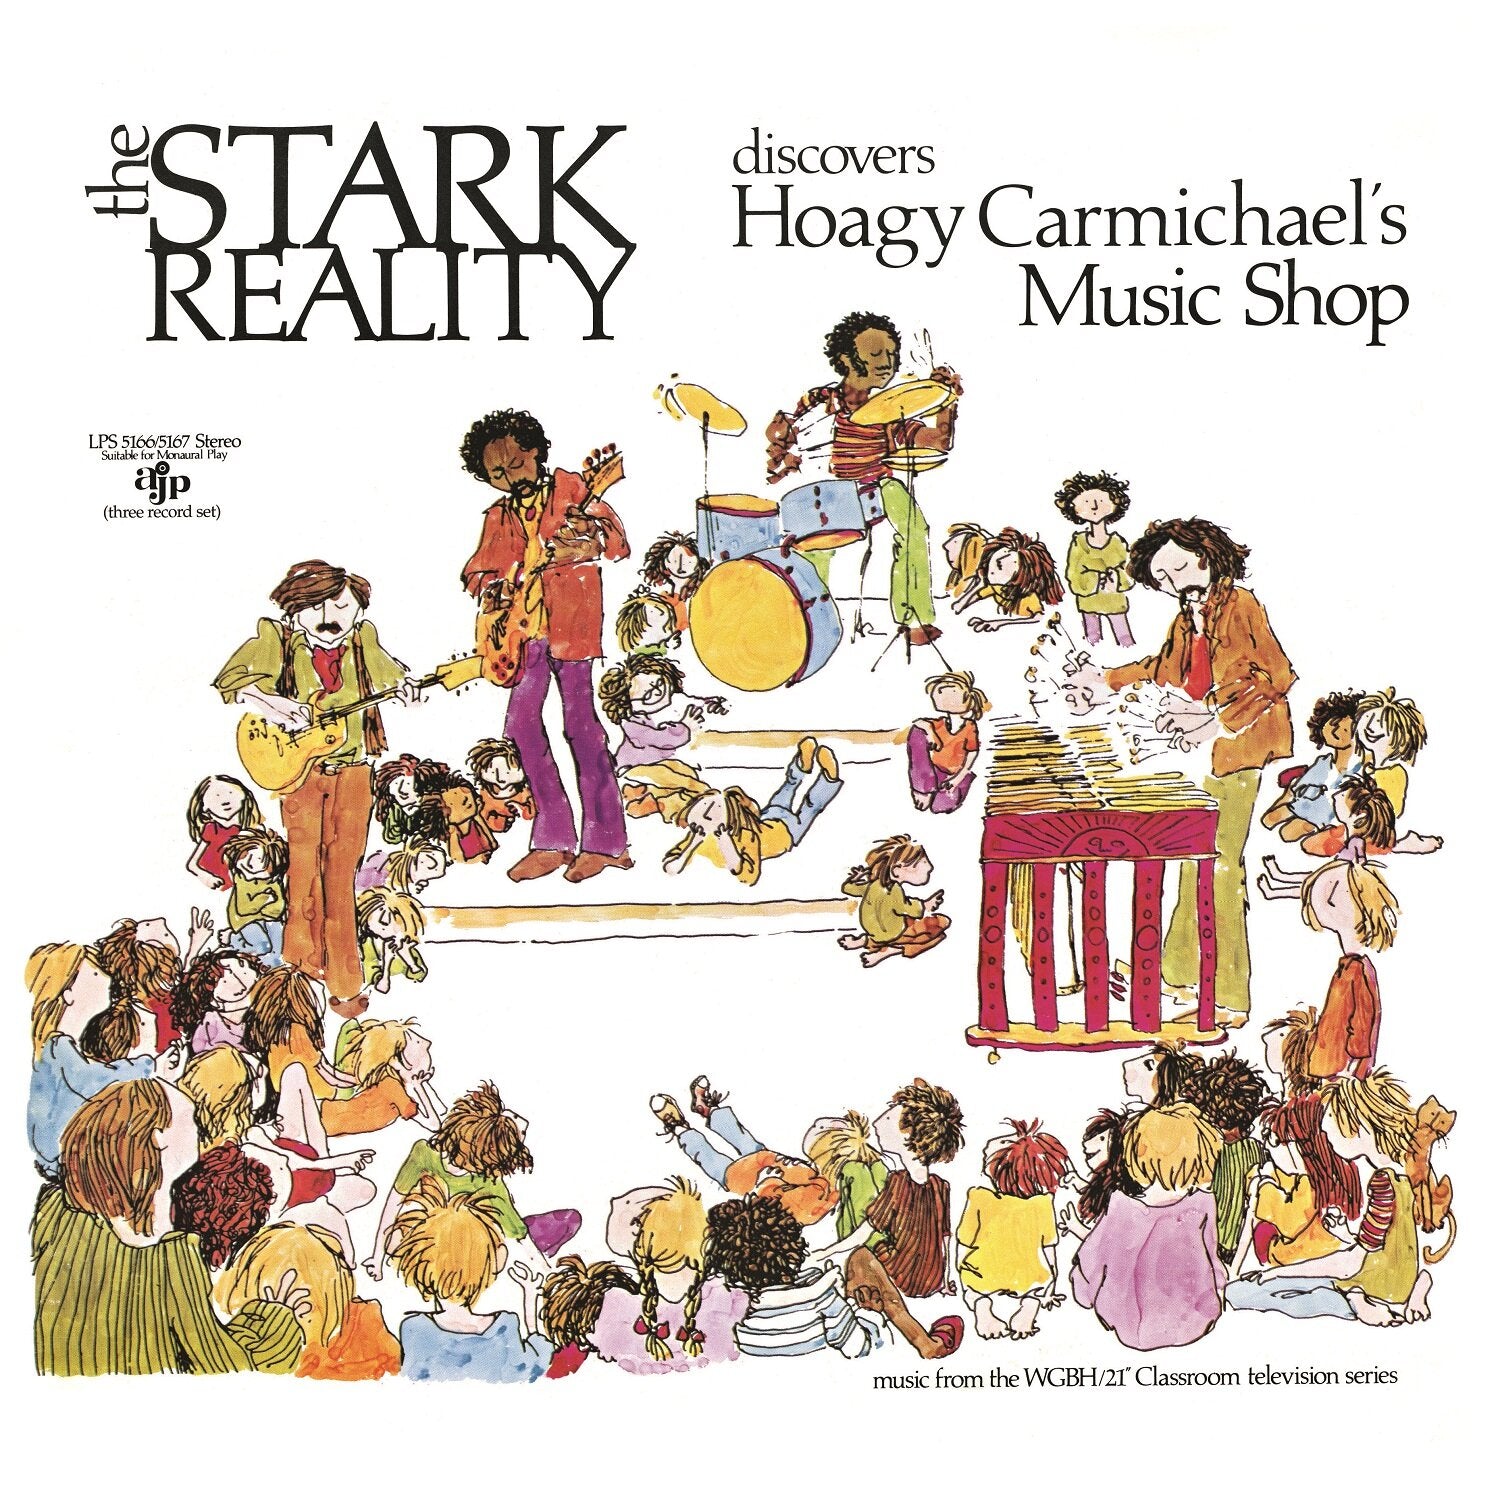 Stark Reality "Discovers Hoagy Carmichael"s Music Shop" 2LP